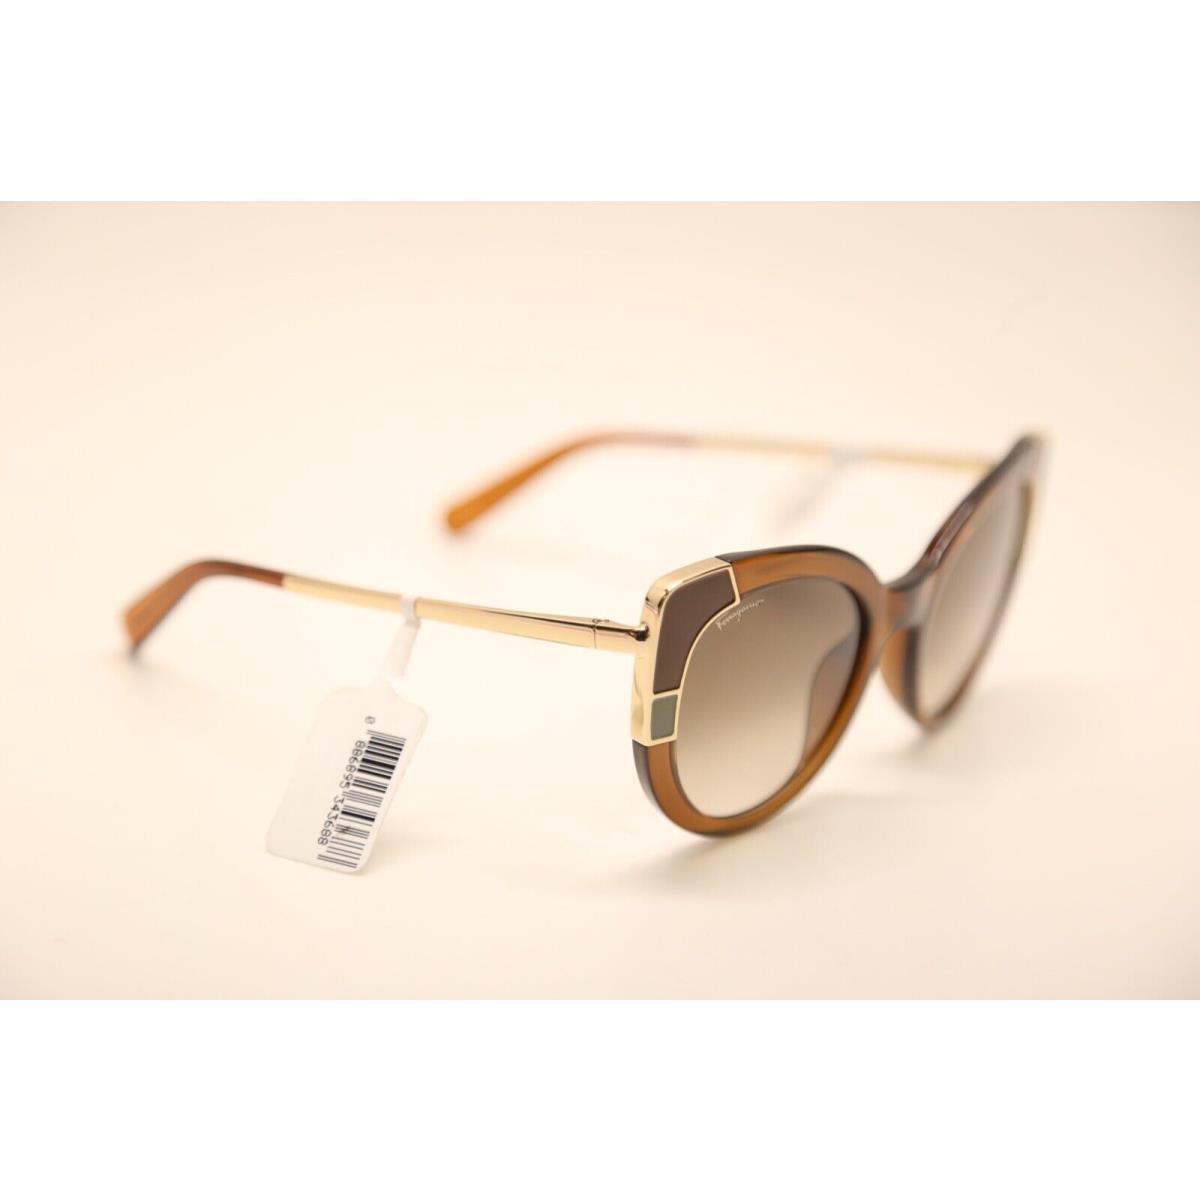 Salvatore Ferragamo sunglasses  - Crystal Brown Frame, Brown Lens 0